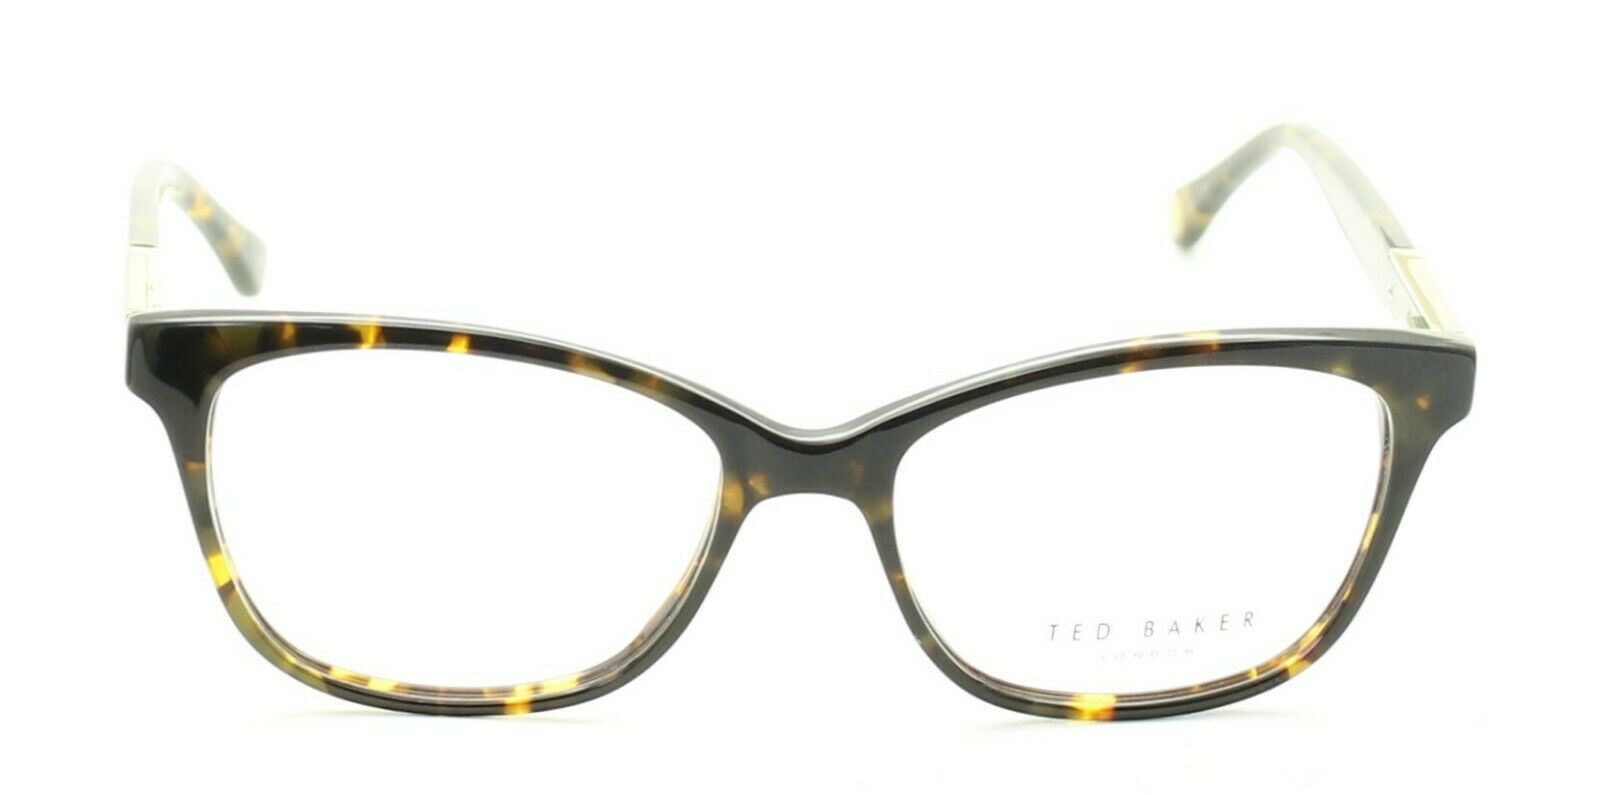 TED BAKER Senna 9124 145 52mm Eyewear FRAMES Glasses Eyeglasses RX Optical - New